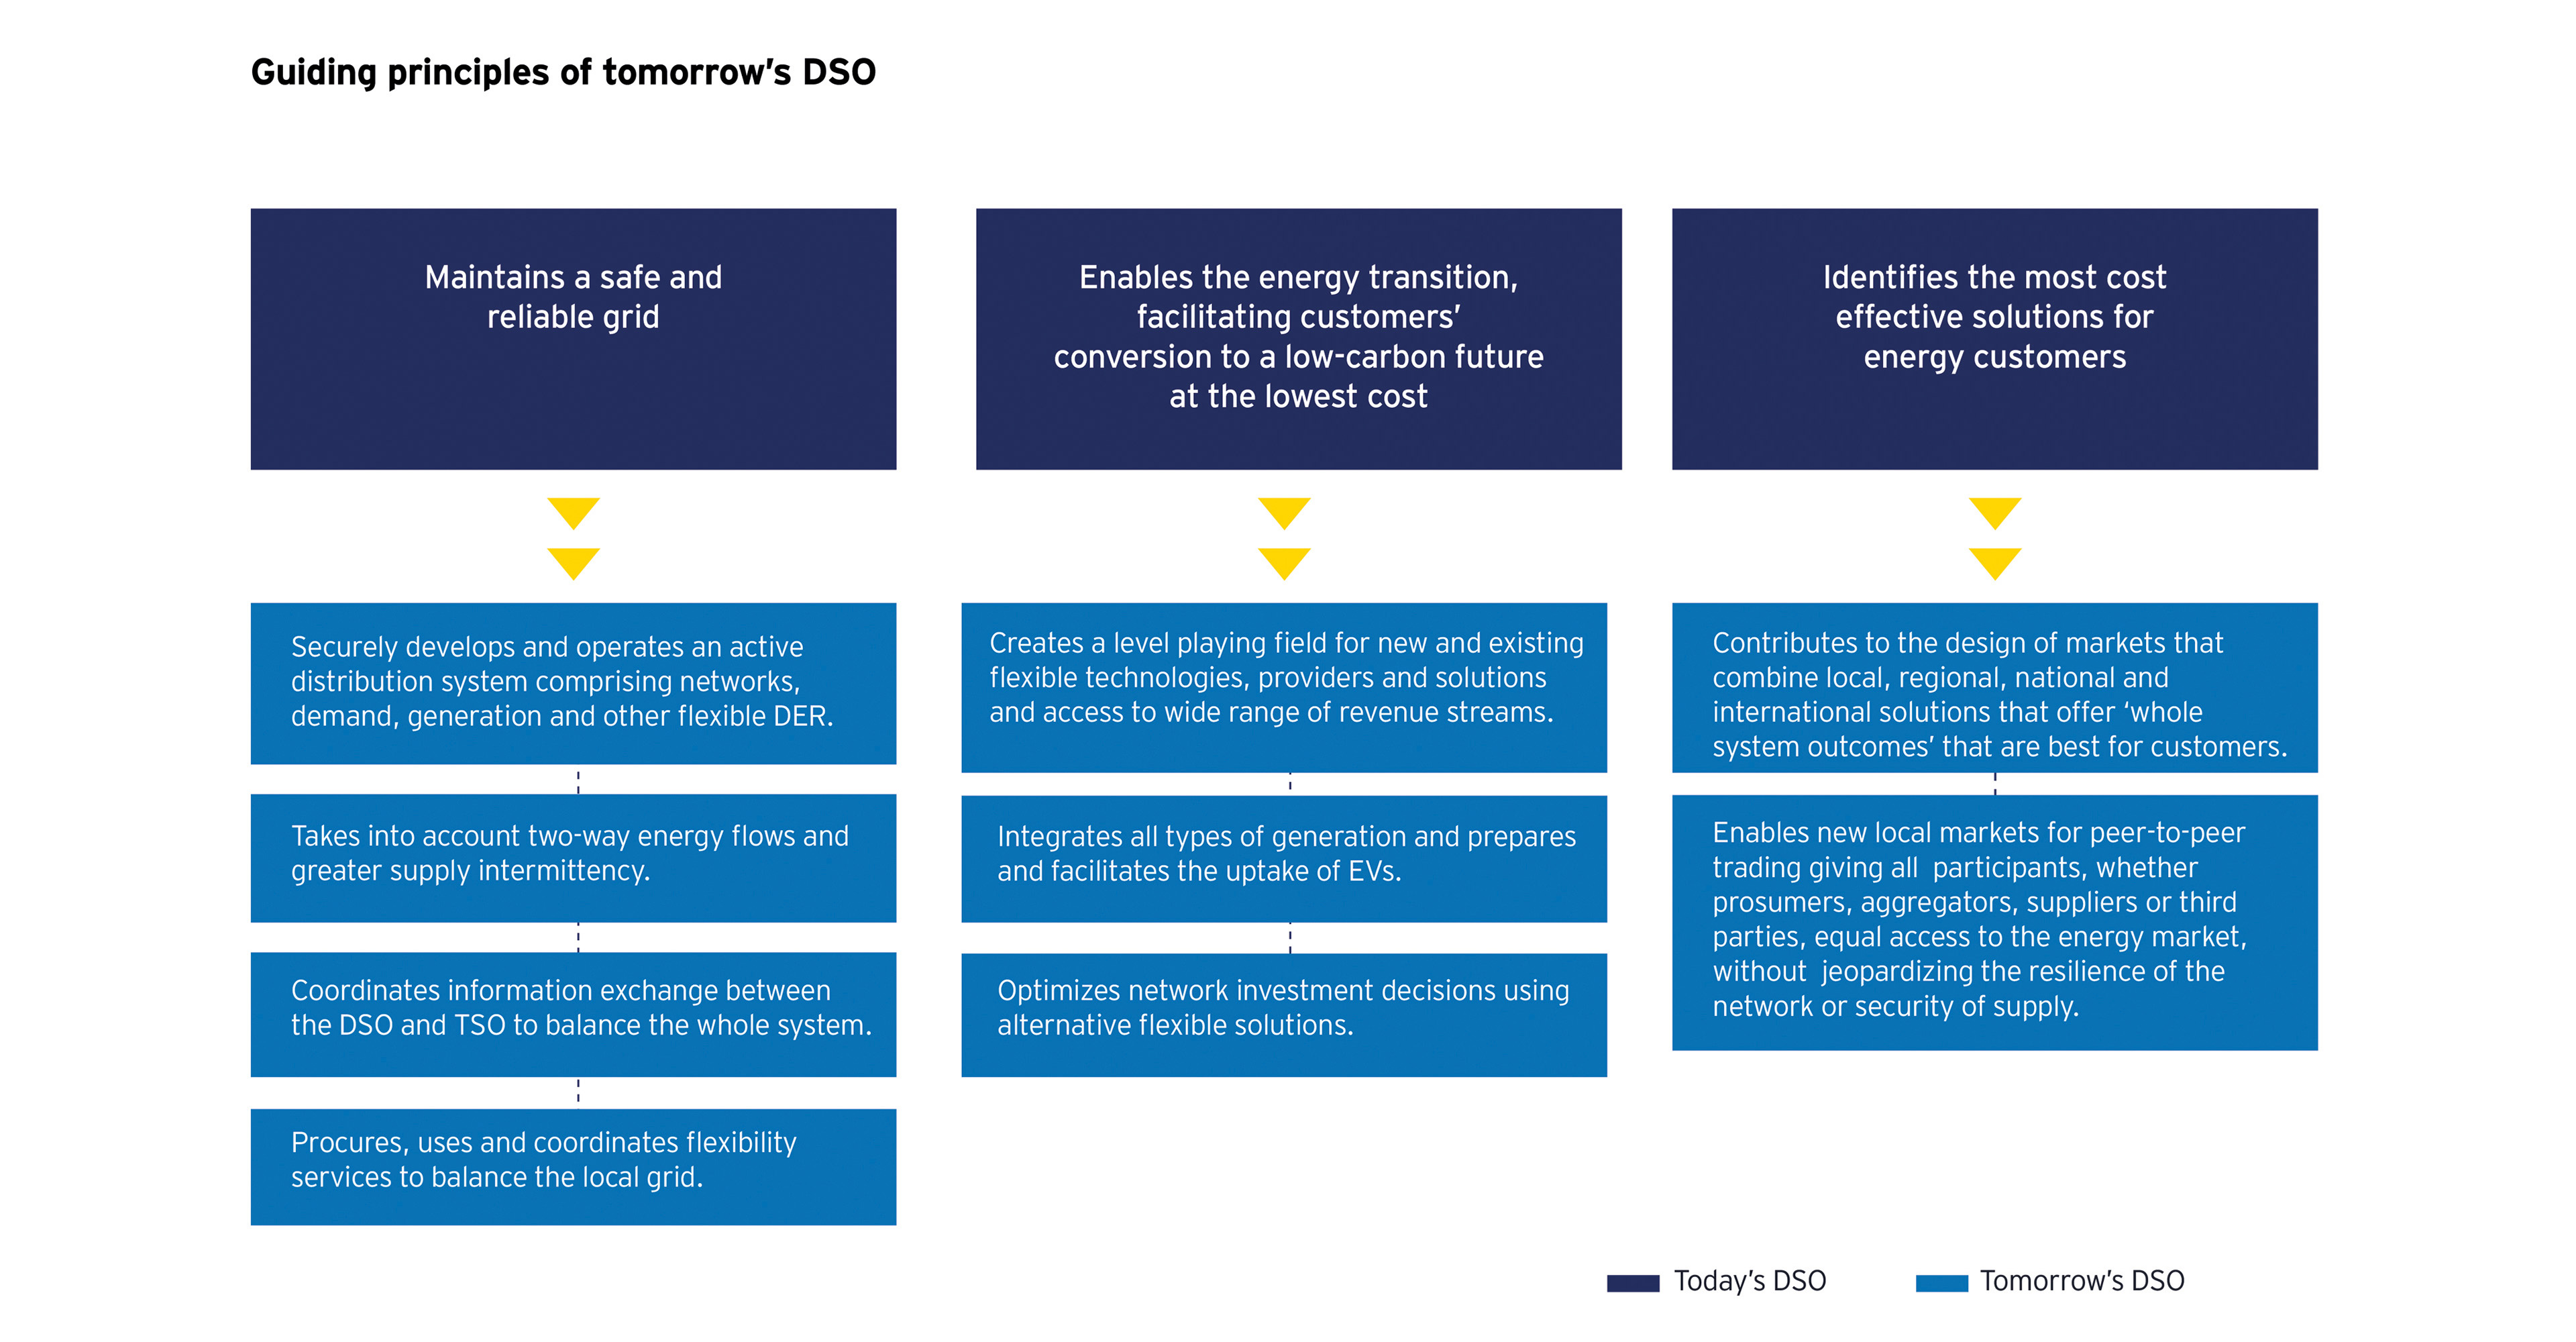 Guiding principles of DSO